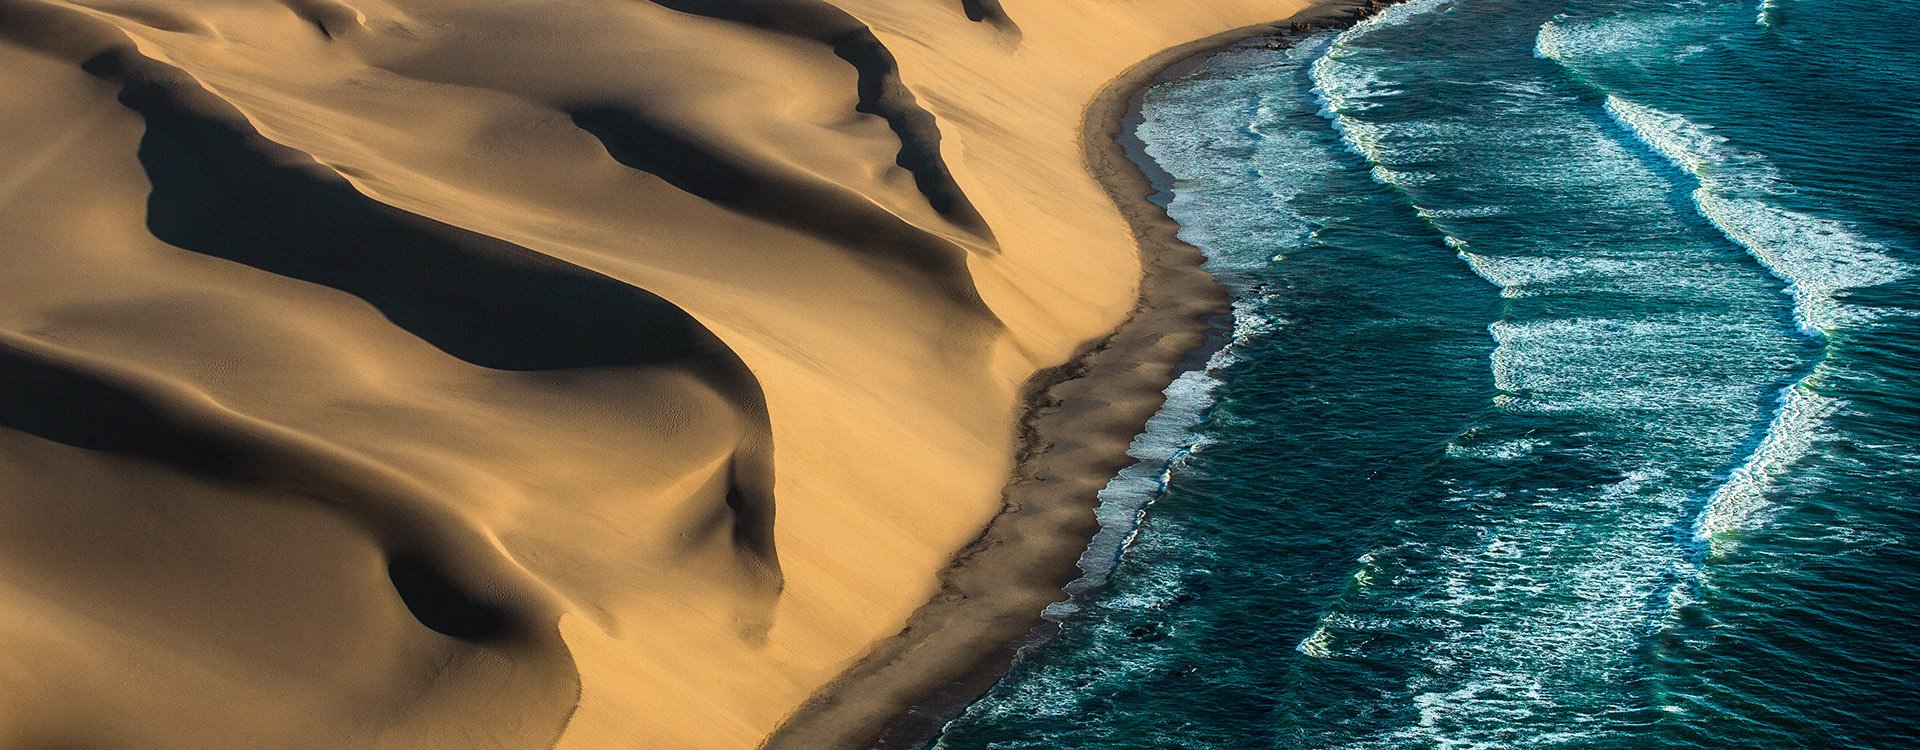 Cape Cross Seal Reserve in the South Atlantic in the Skeleton Coast, Namib desert